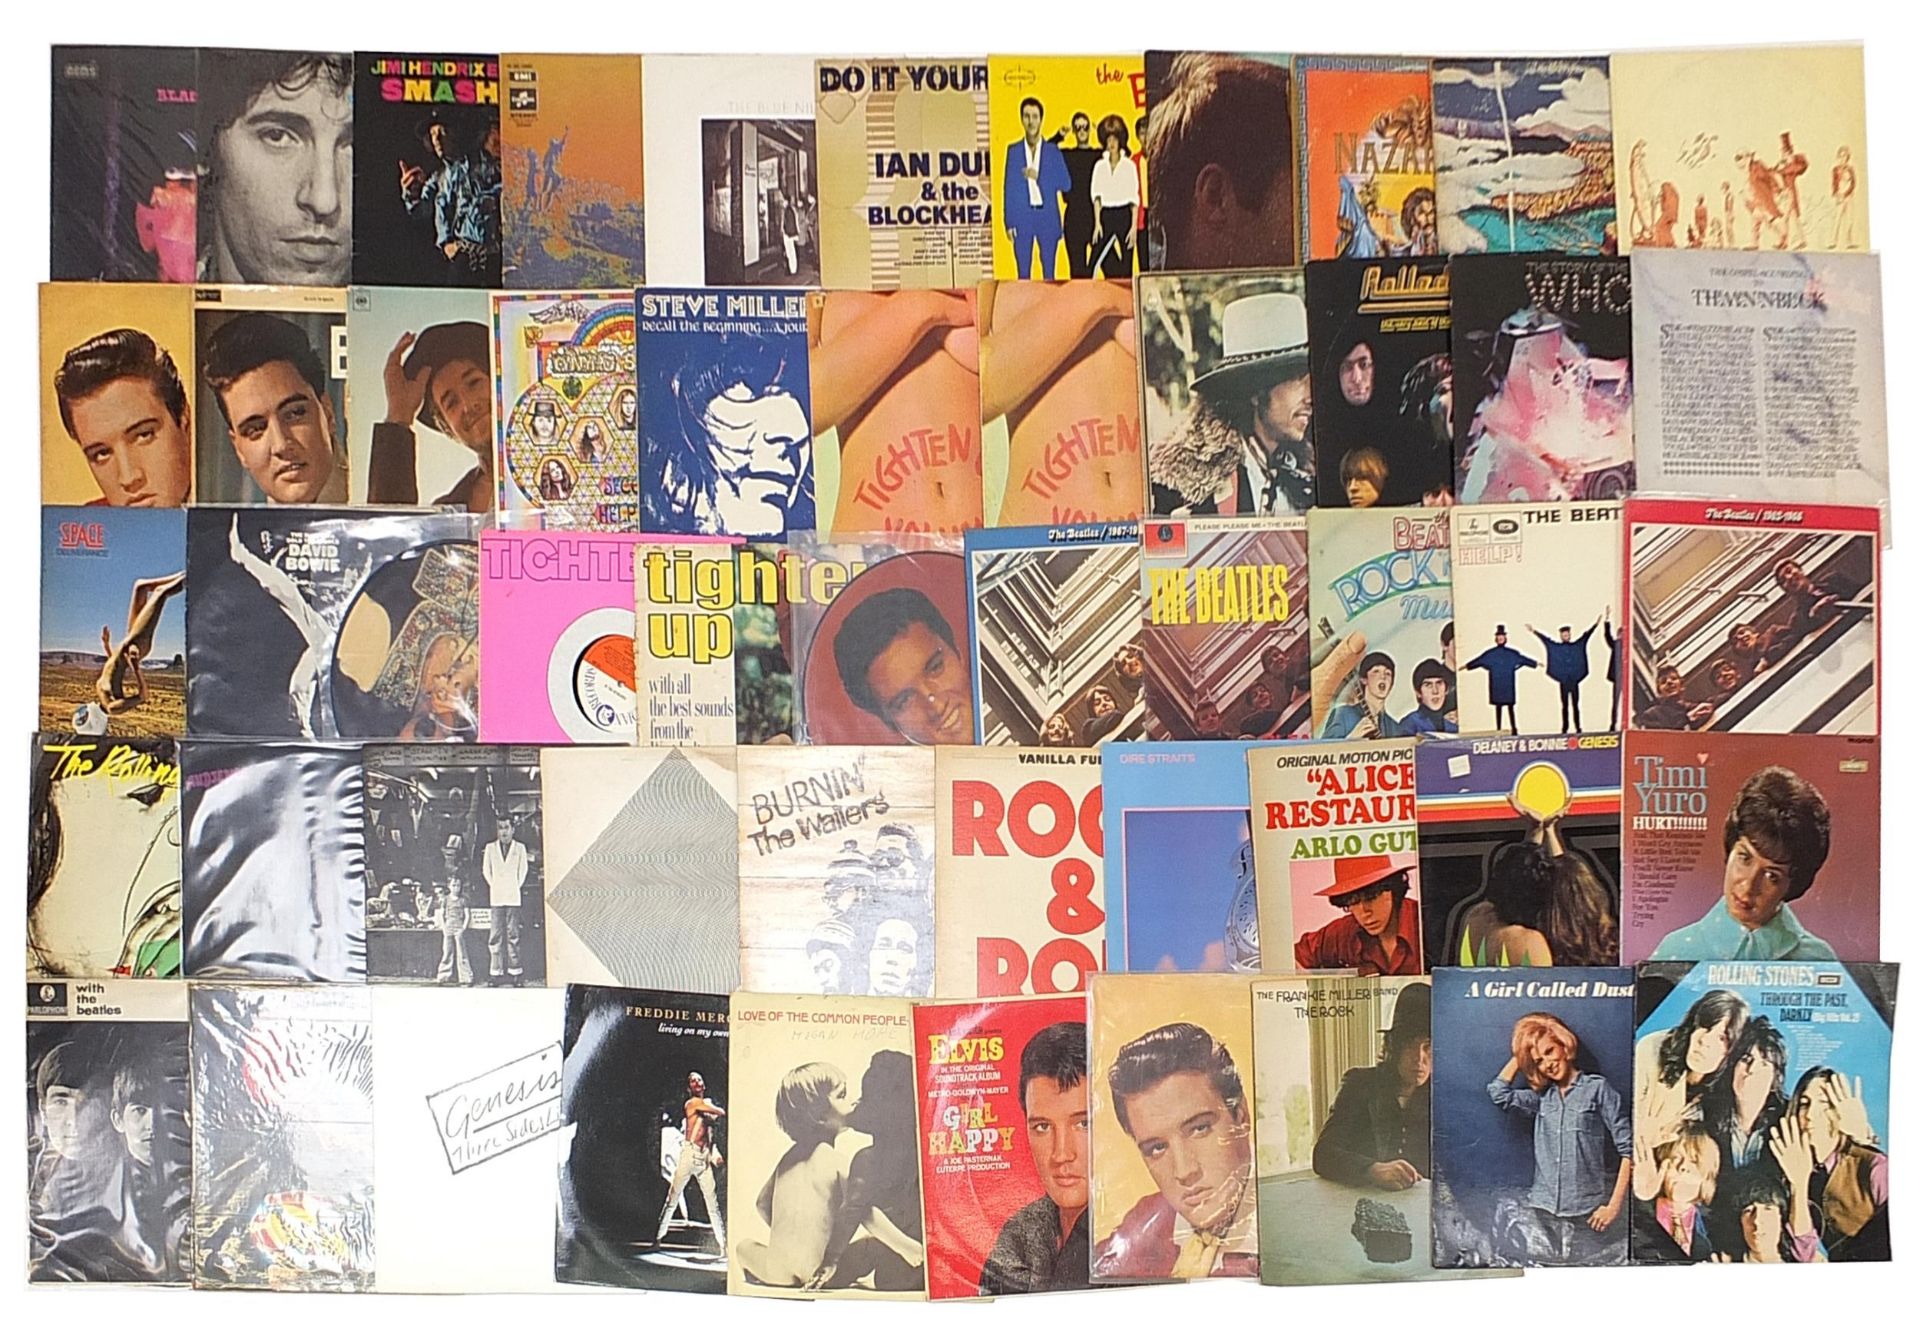 Vinyl LP records and picture discs including Black Sabbath, The Beatles, Elvis Presley, The